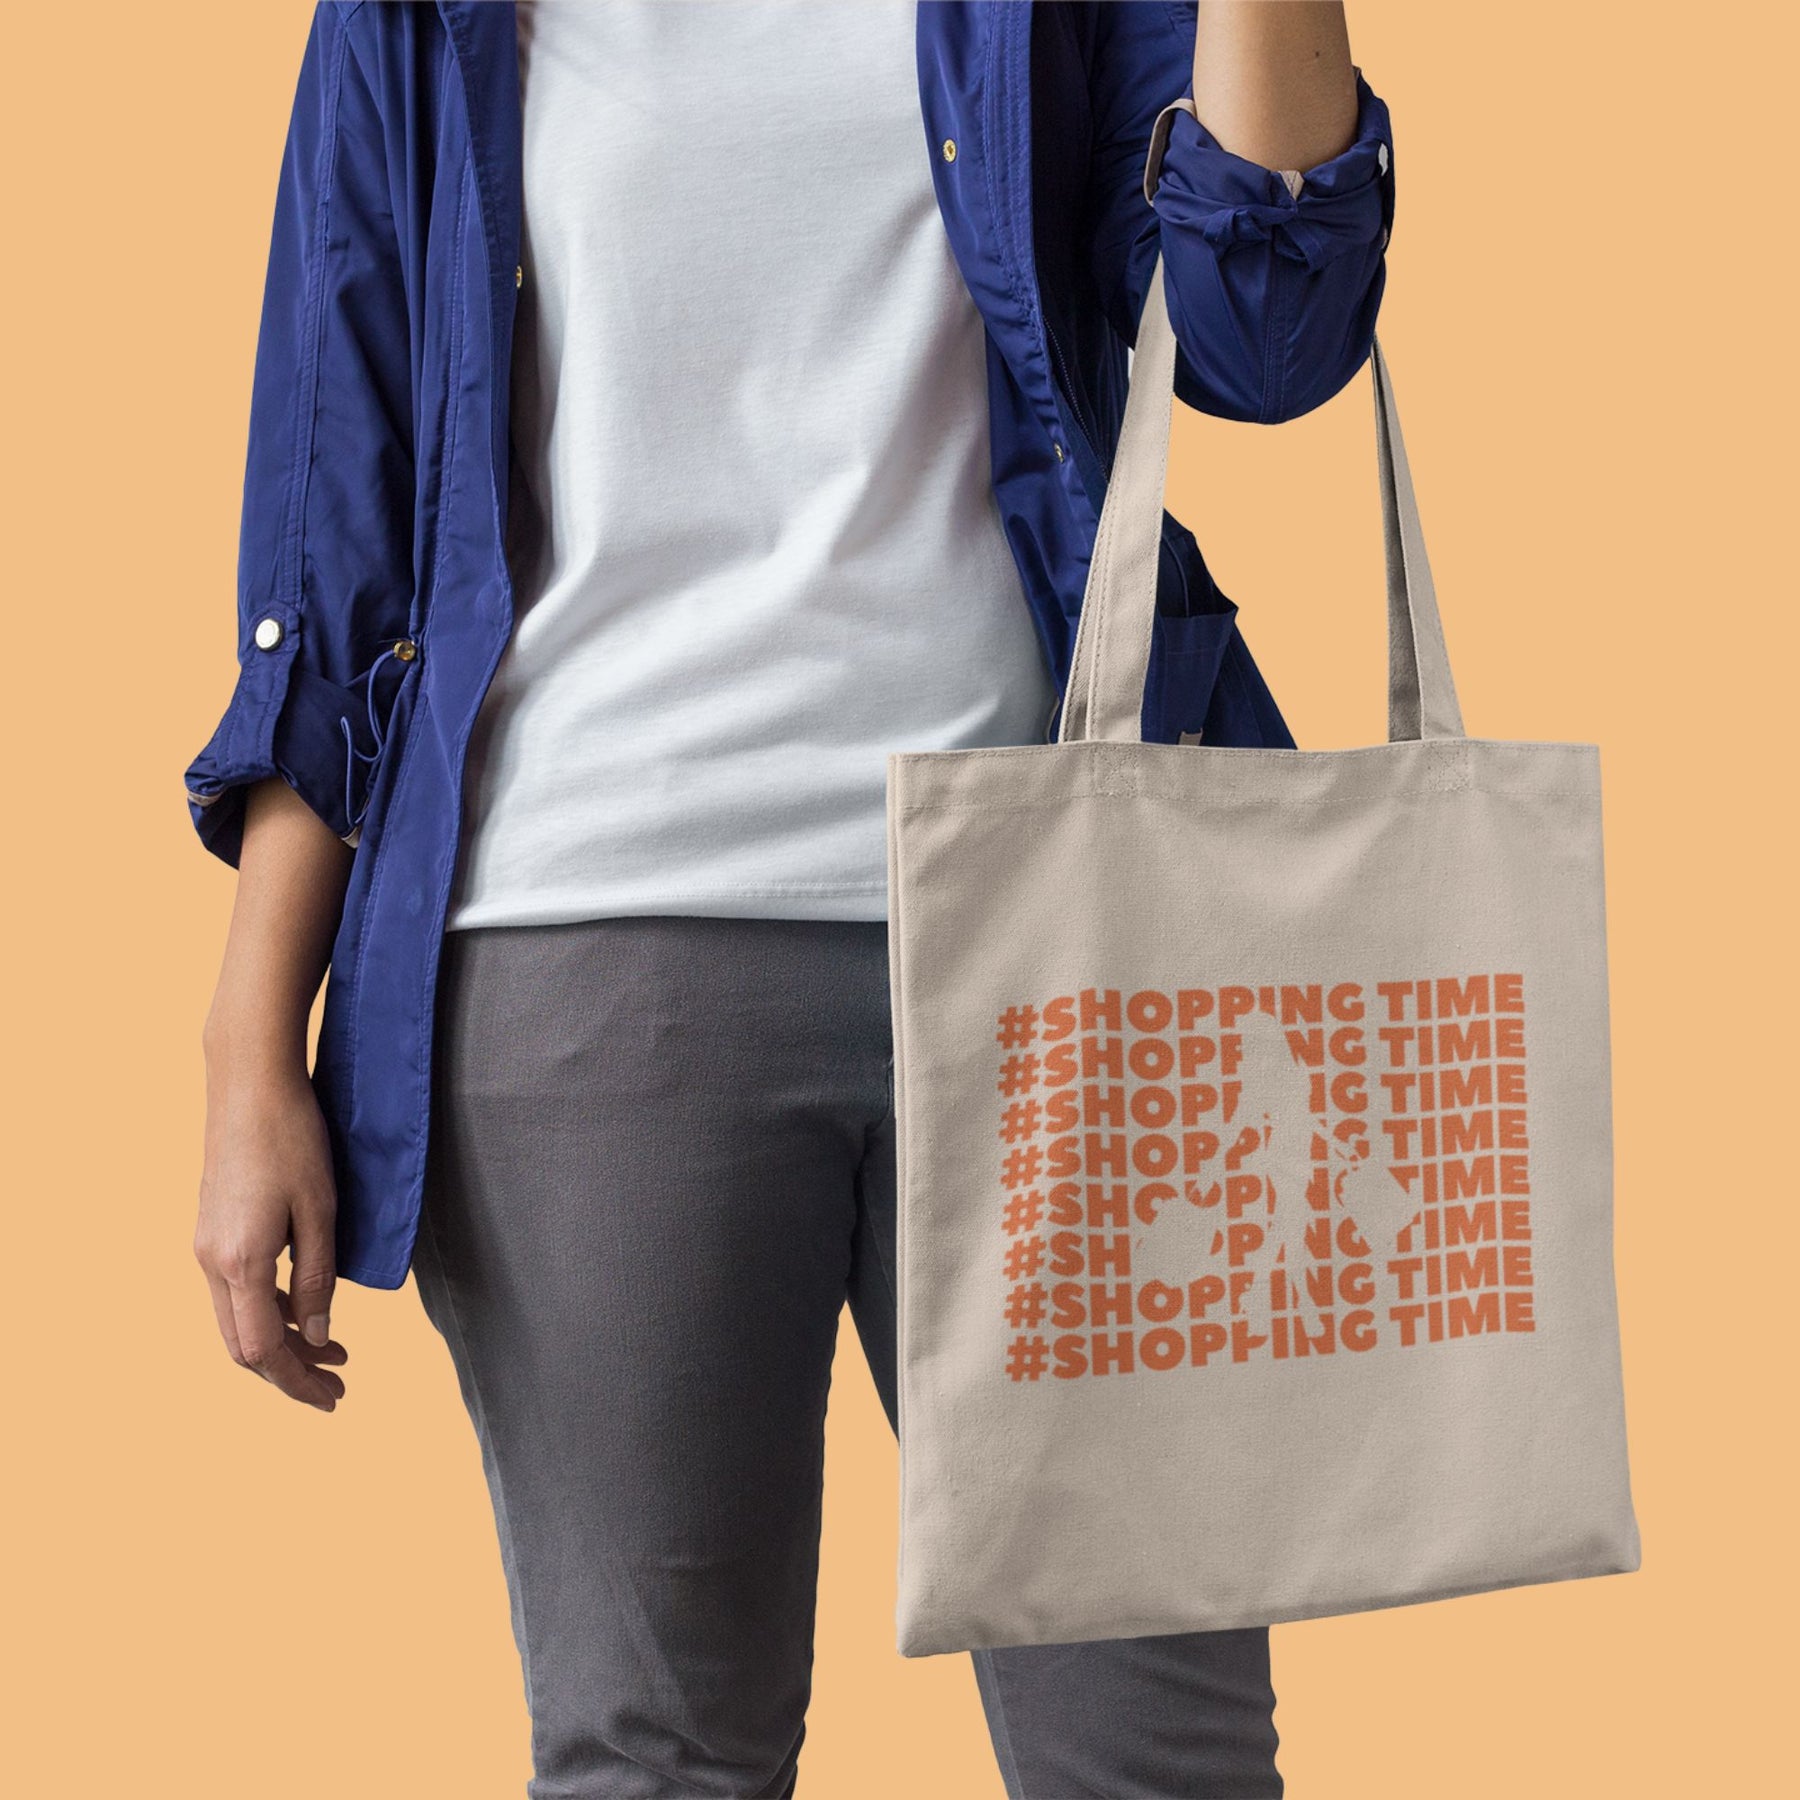 shopping-time-cotton-printed-creamy-white-tote-bag-gogirgit-2